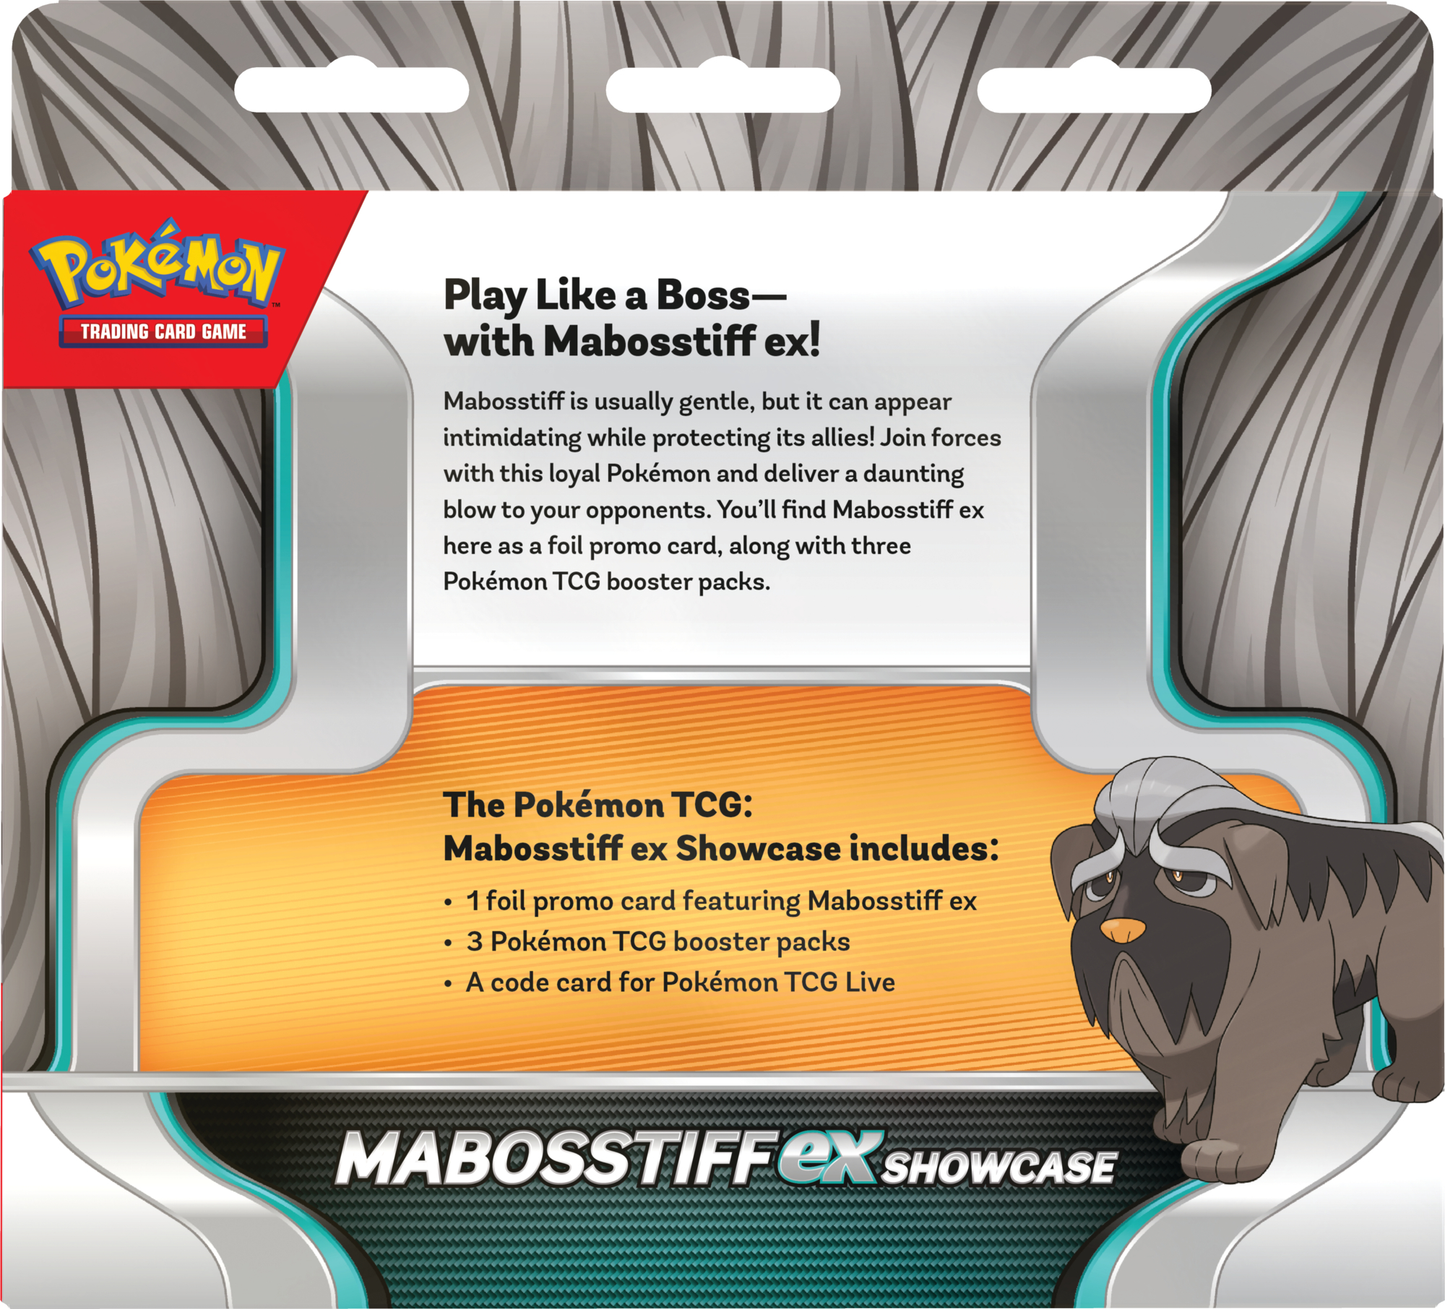 Pokémon Mabosstiff EX SHOWCASE